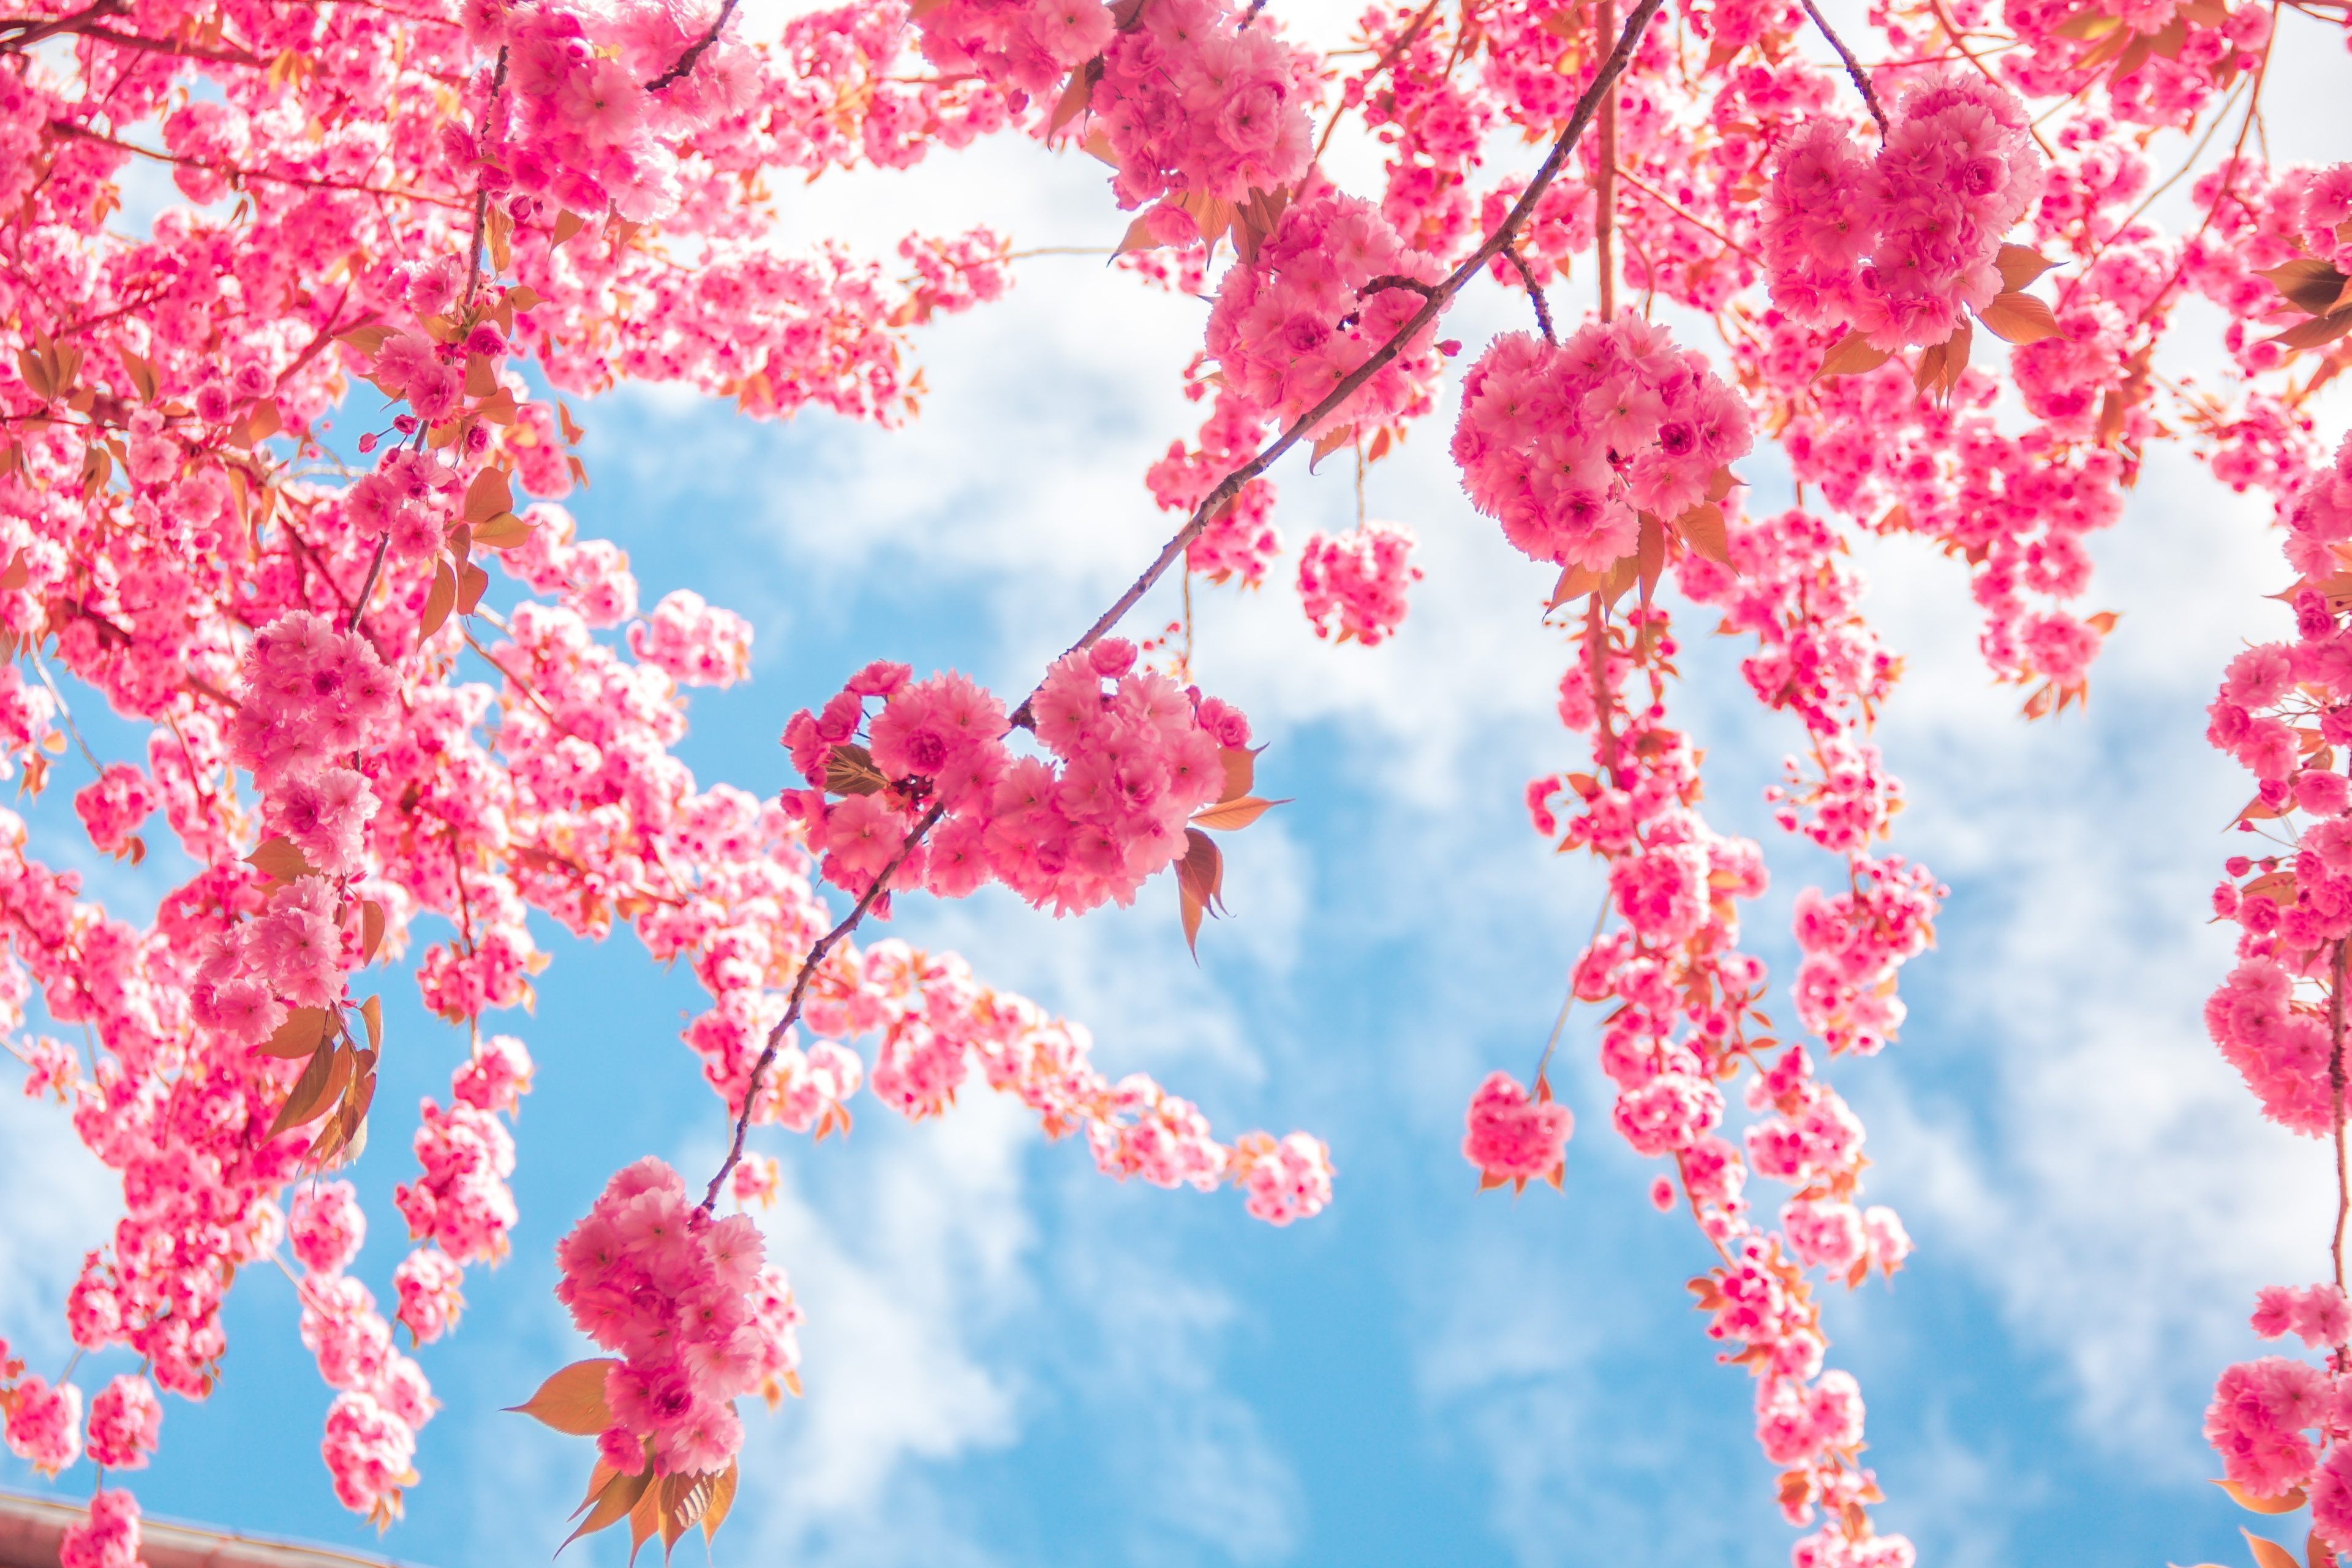 Free Download Wallpaper Of Pink Tree In 4k Resolution - 3840x2560 Wallpaper  